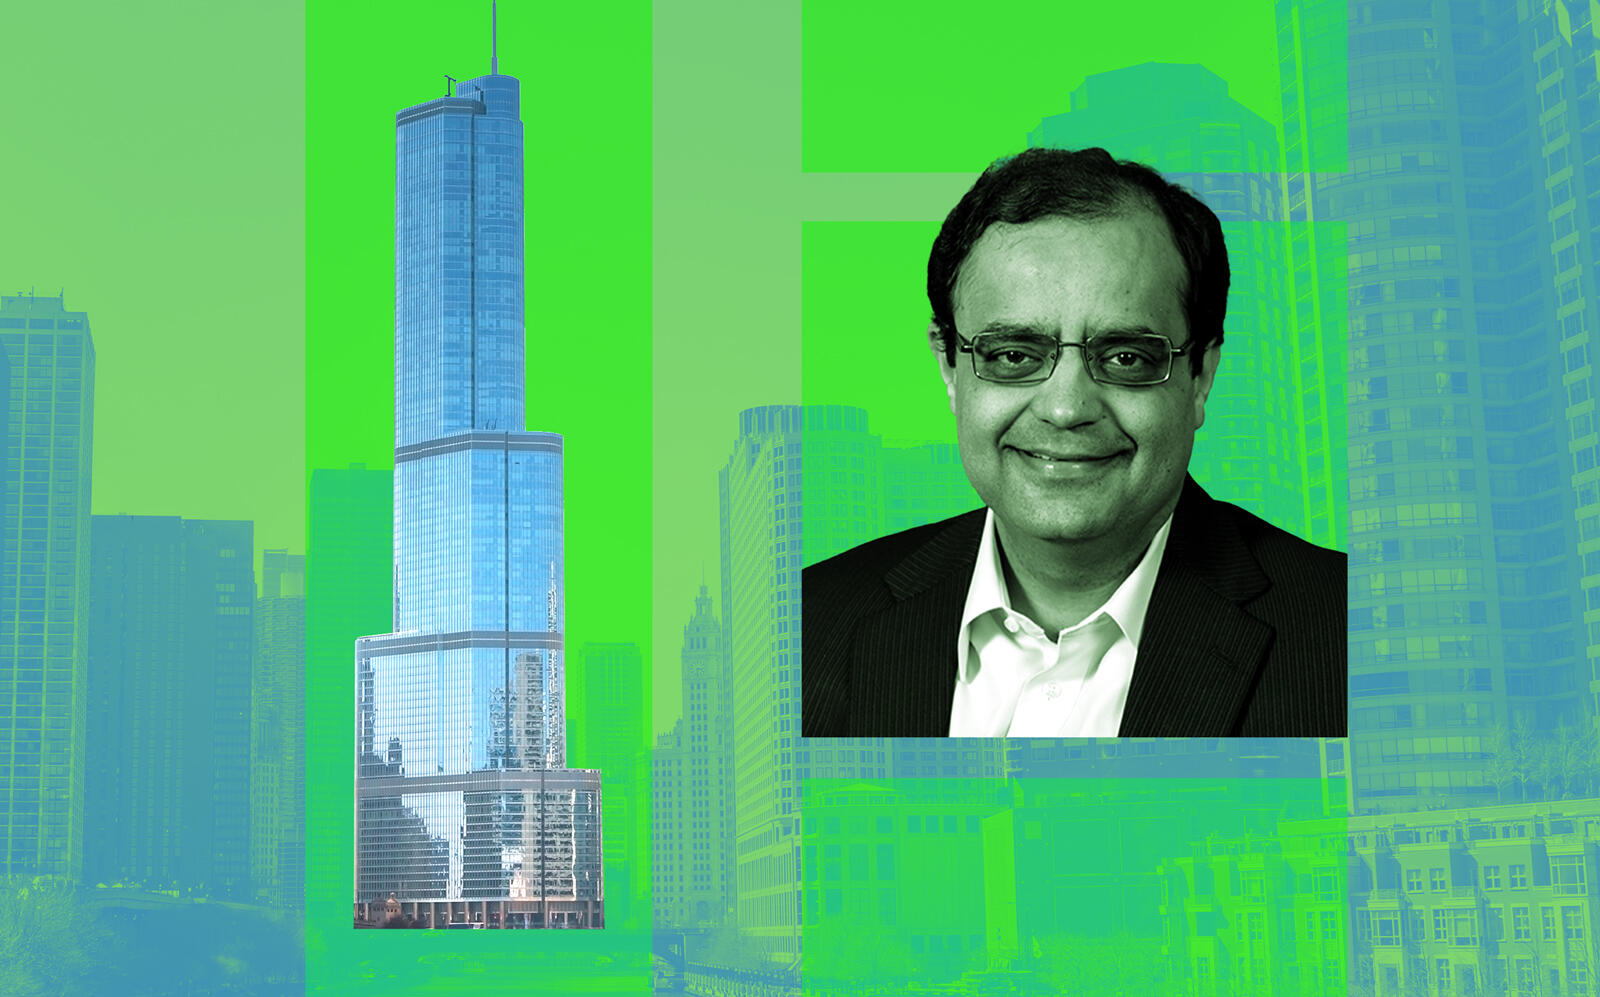 Trump Tower Chicago with Vistex CEO Sanjay Shah (iStock, Vistex)